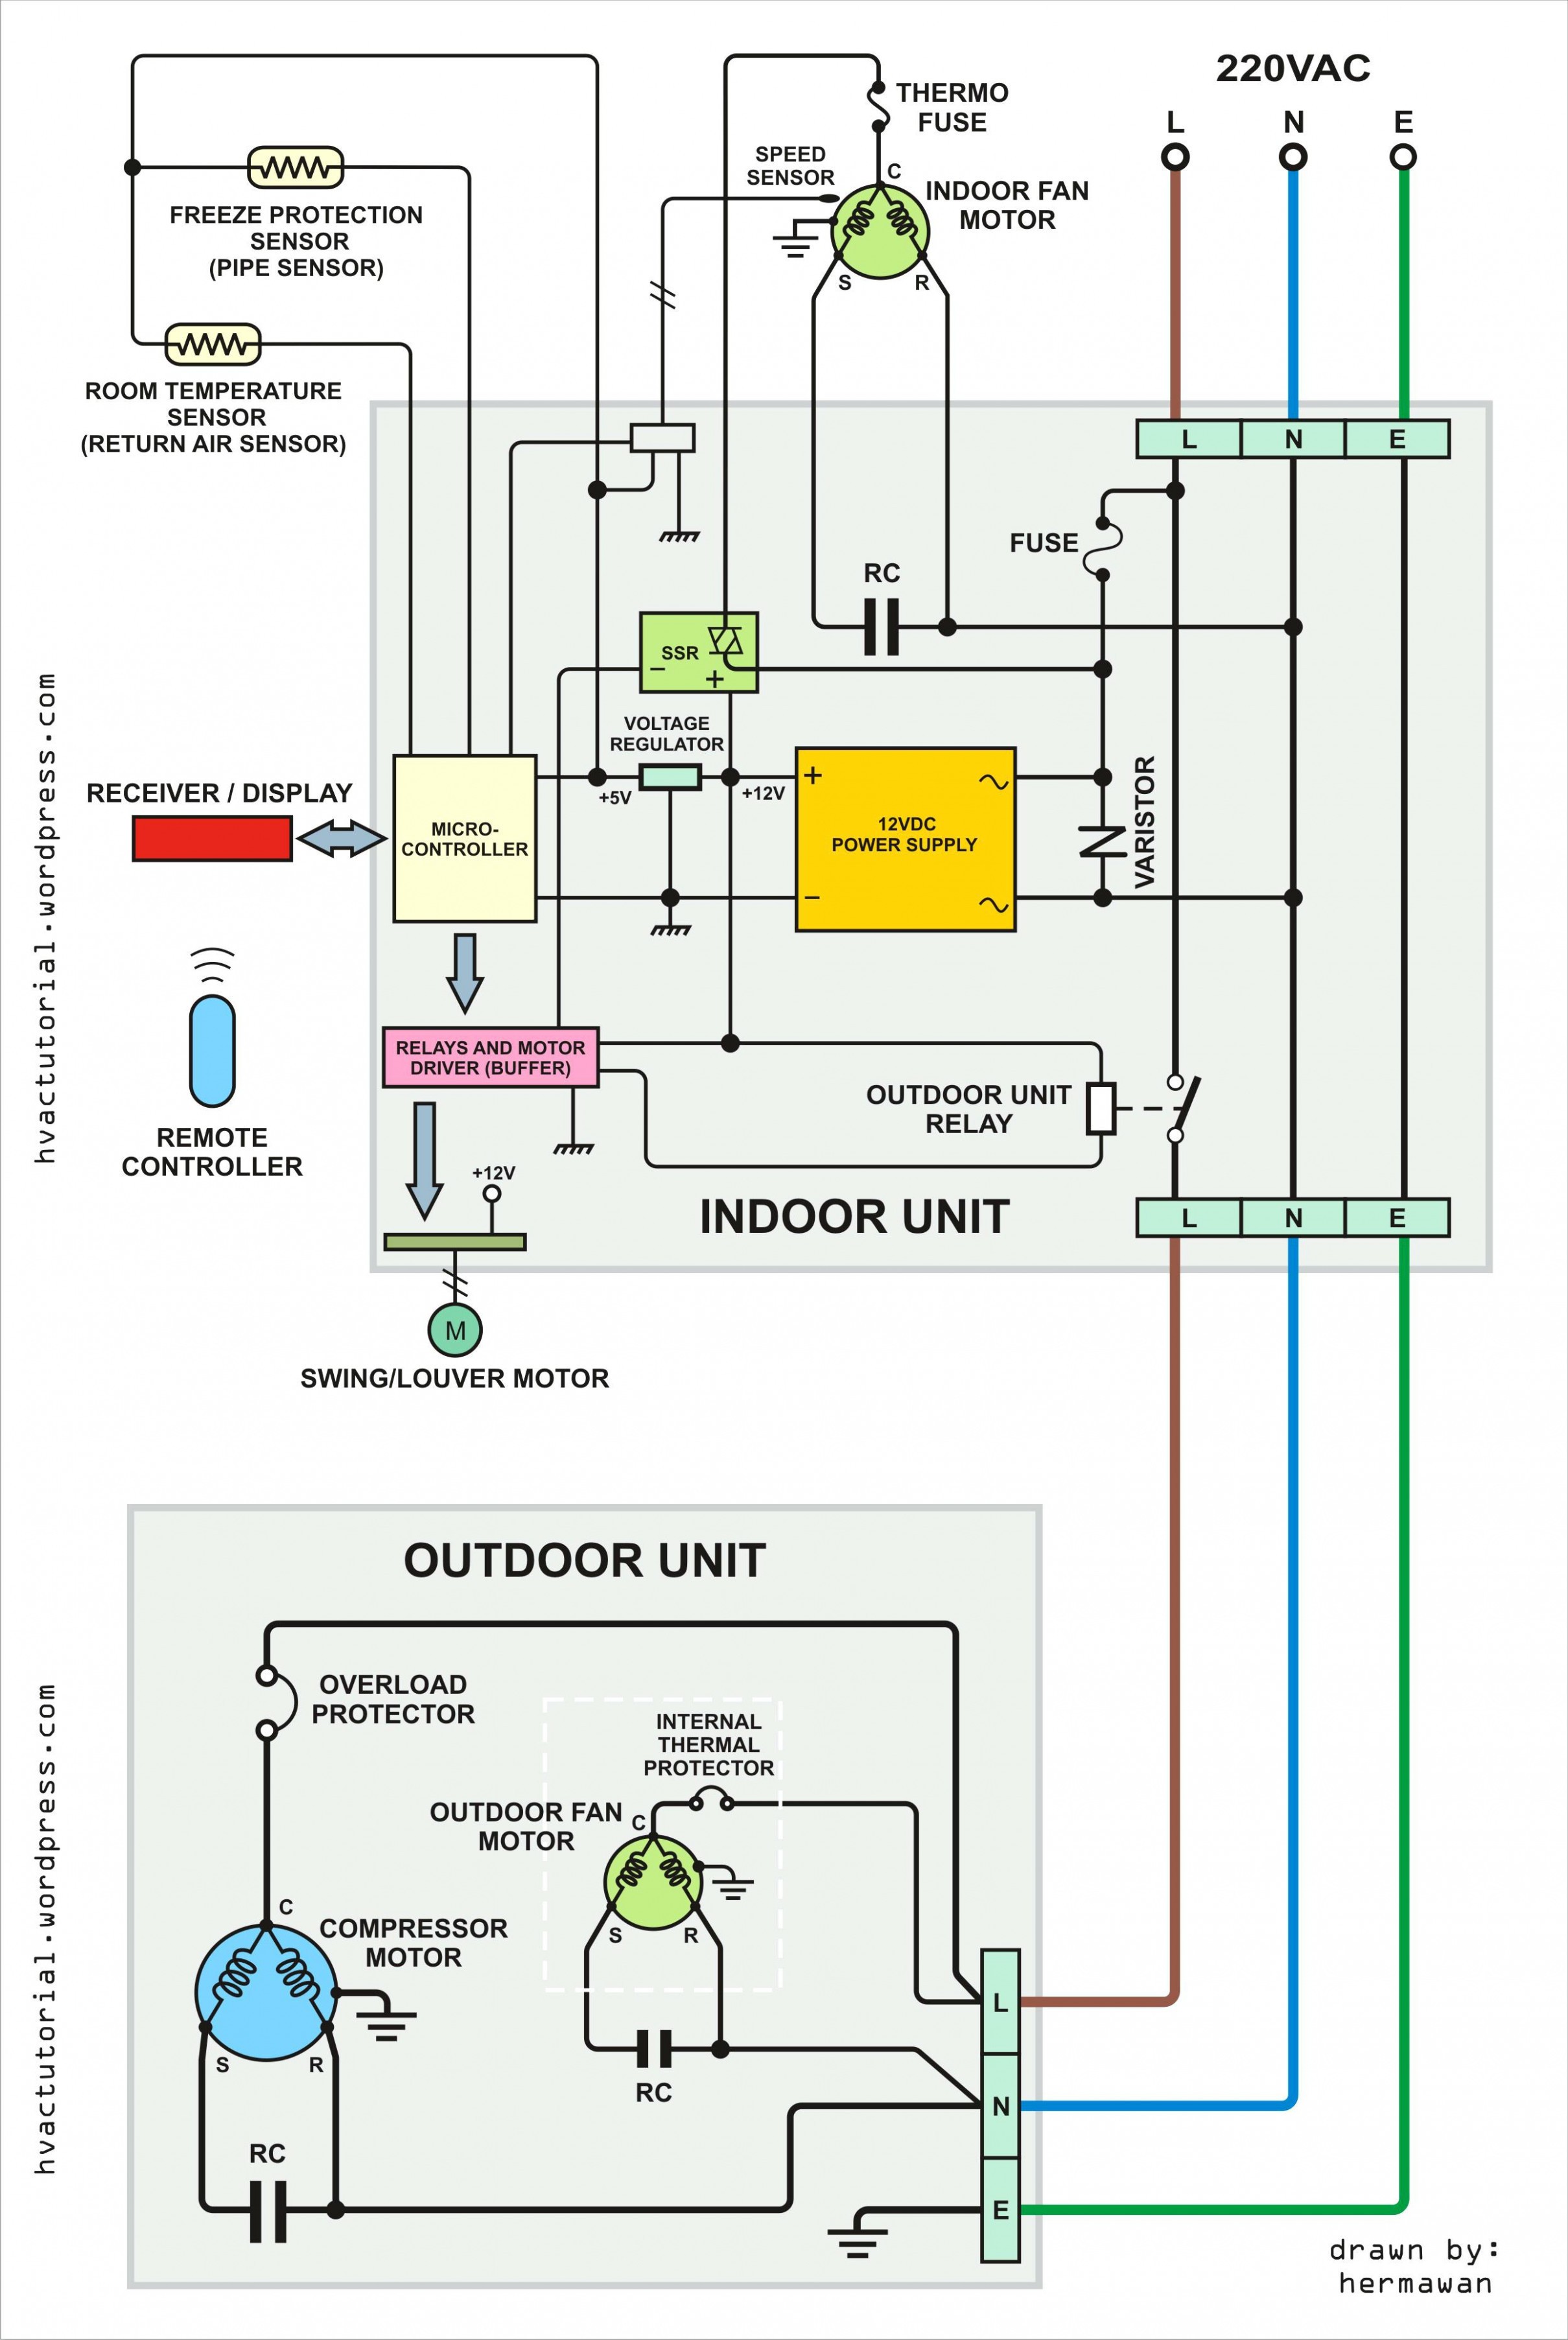 Heat Pump thermostat Wiring Diagram Goodman Heat Pump thermostat Wiring Diagram Elegant Troubleshooting